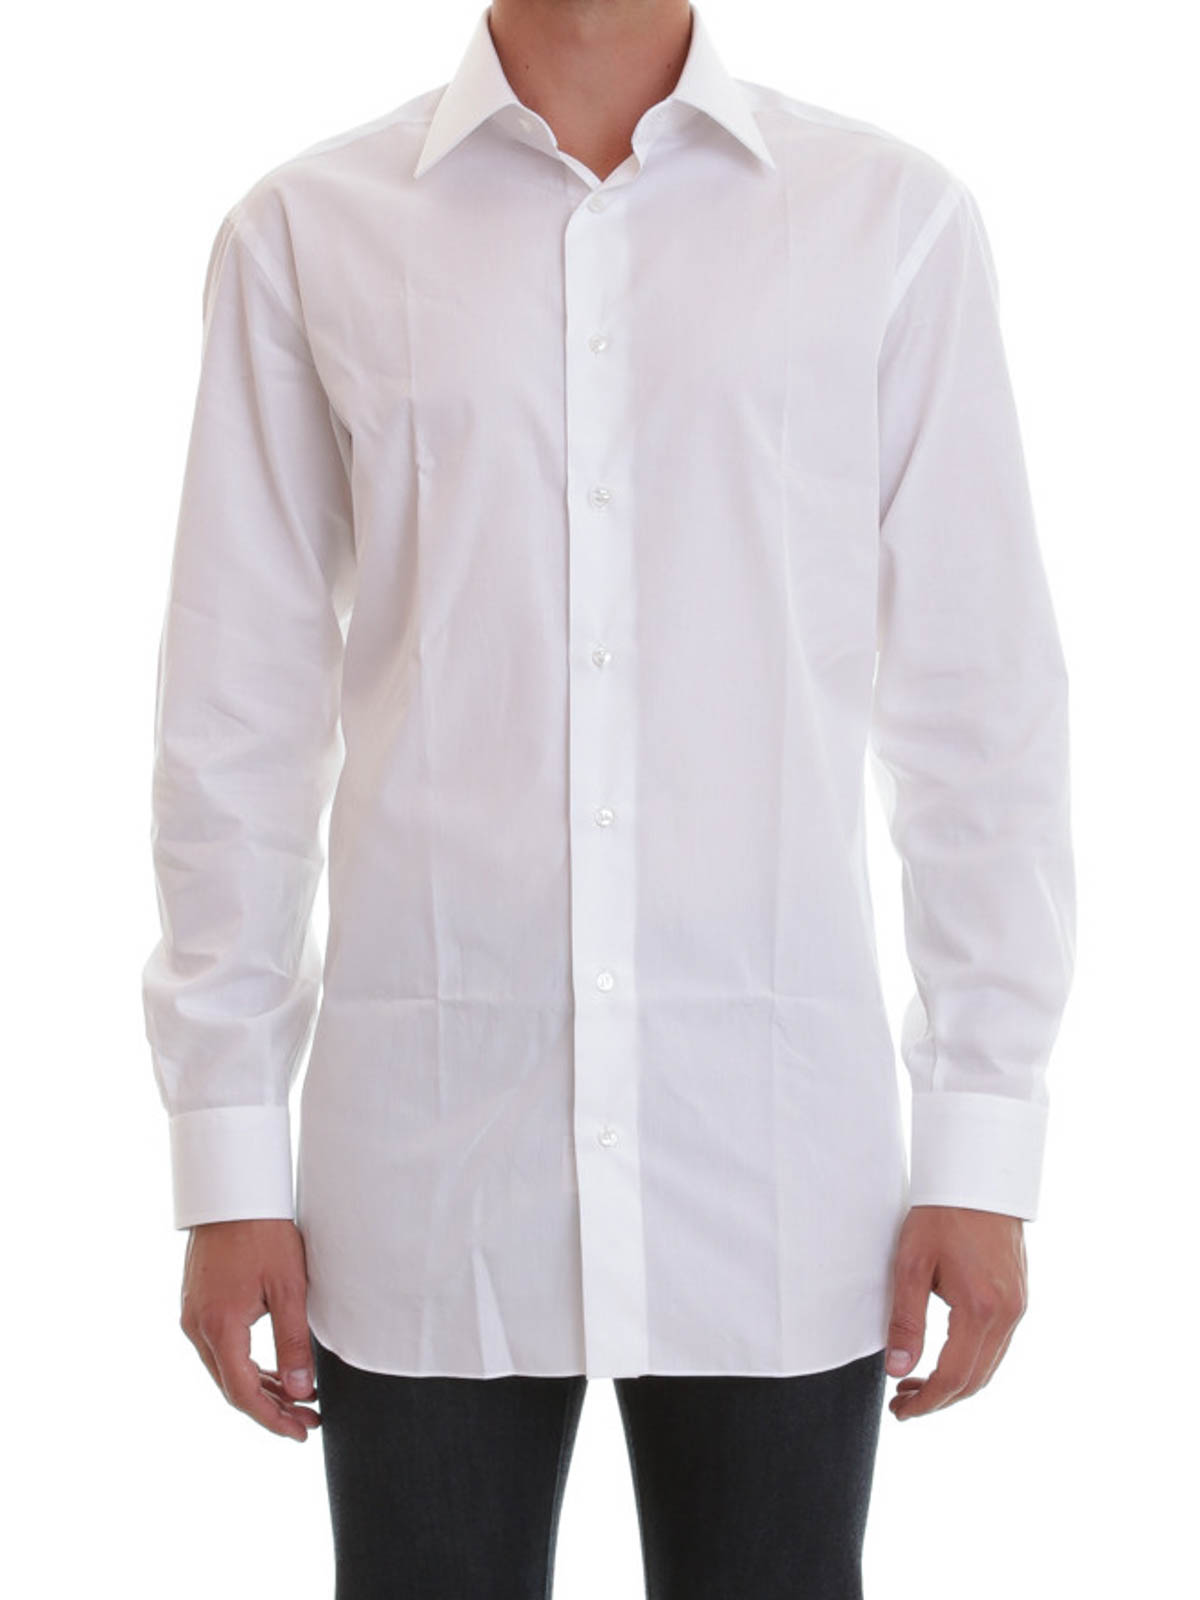 Camisas Brioni - Camisa Blanca Hombre - RCL850PZ0049000